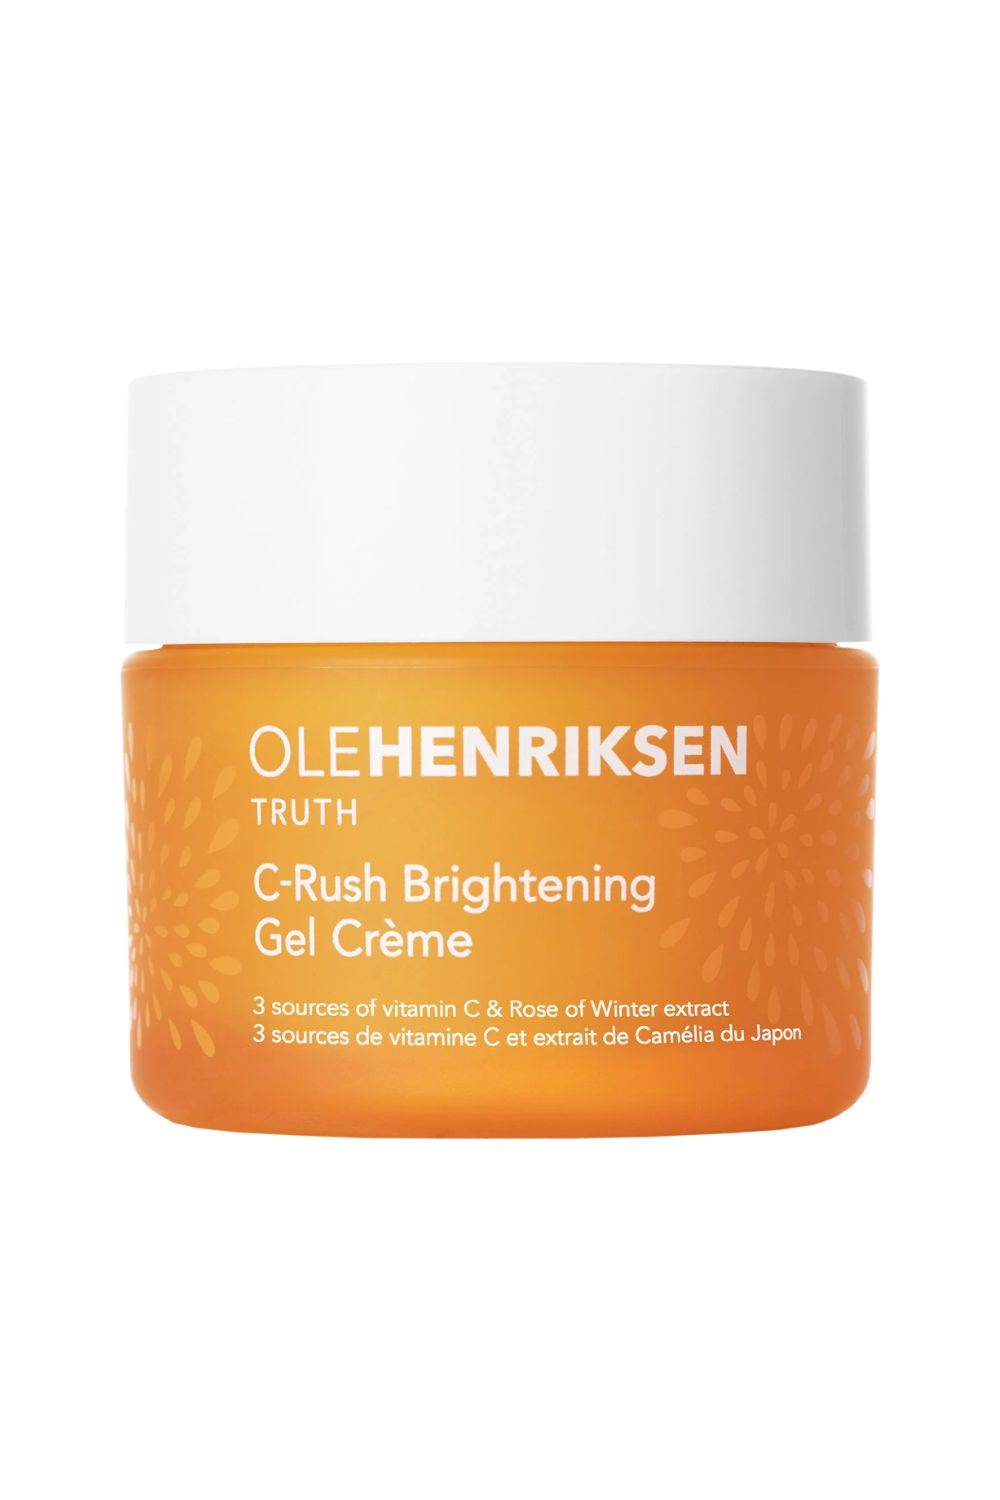 C-Rush Brightening Gel Crème de OLEHENRIKSEN